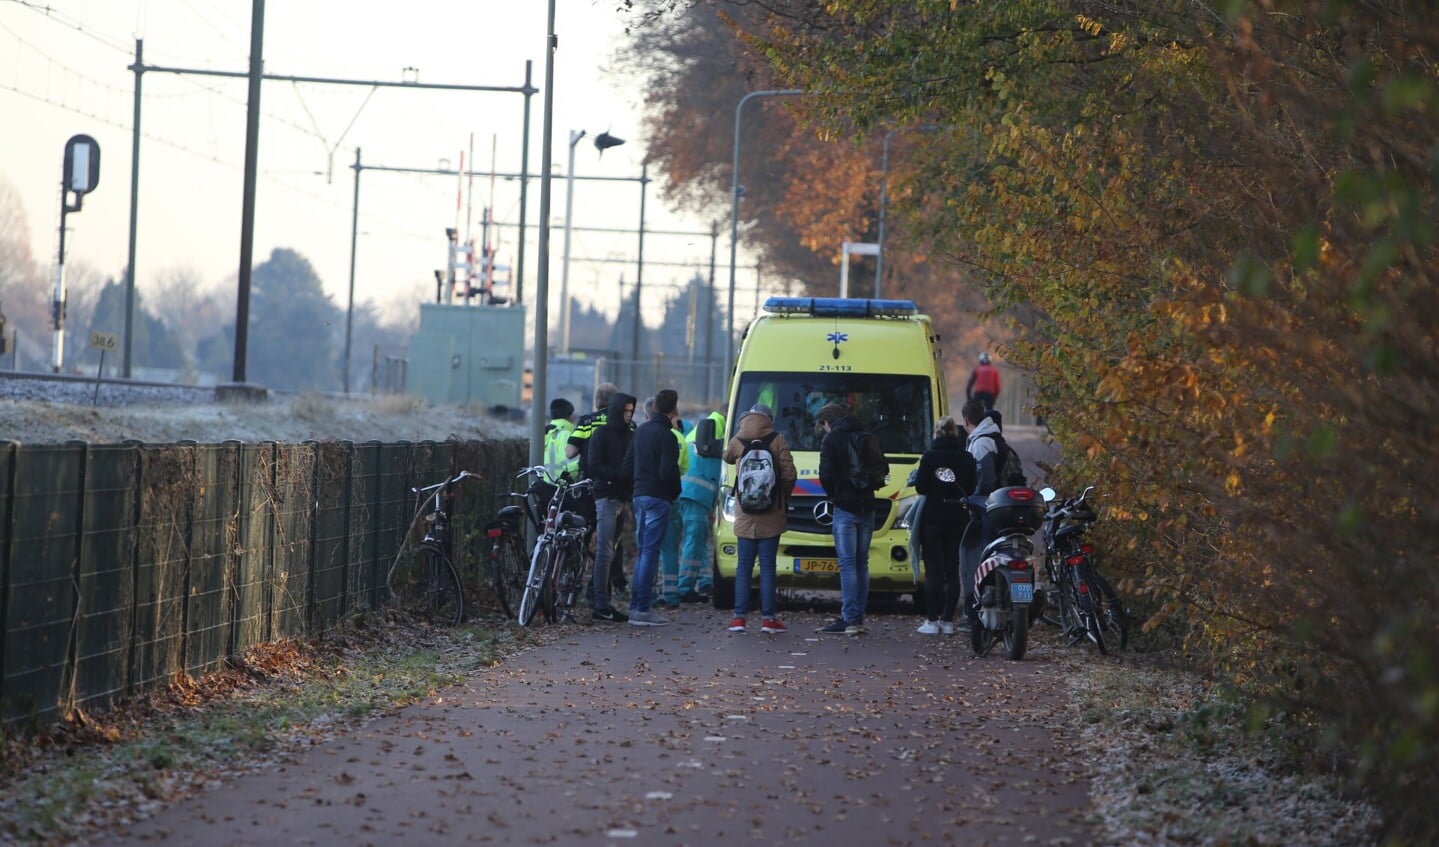 De ambulance. (Foto: Maickel Keijzers / Hendriks multimedia)